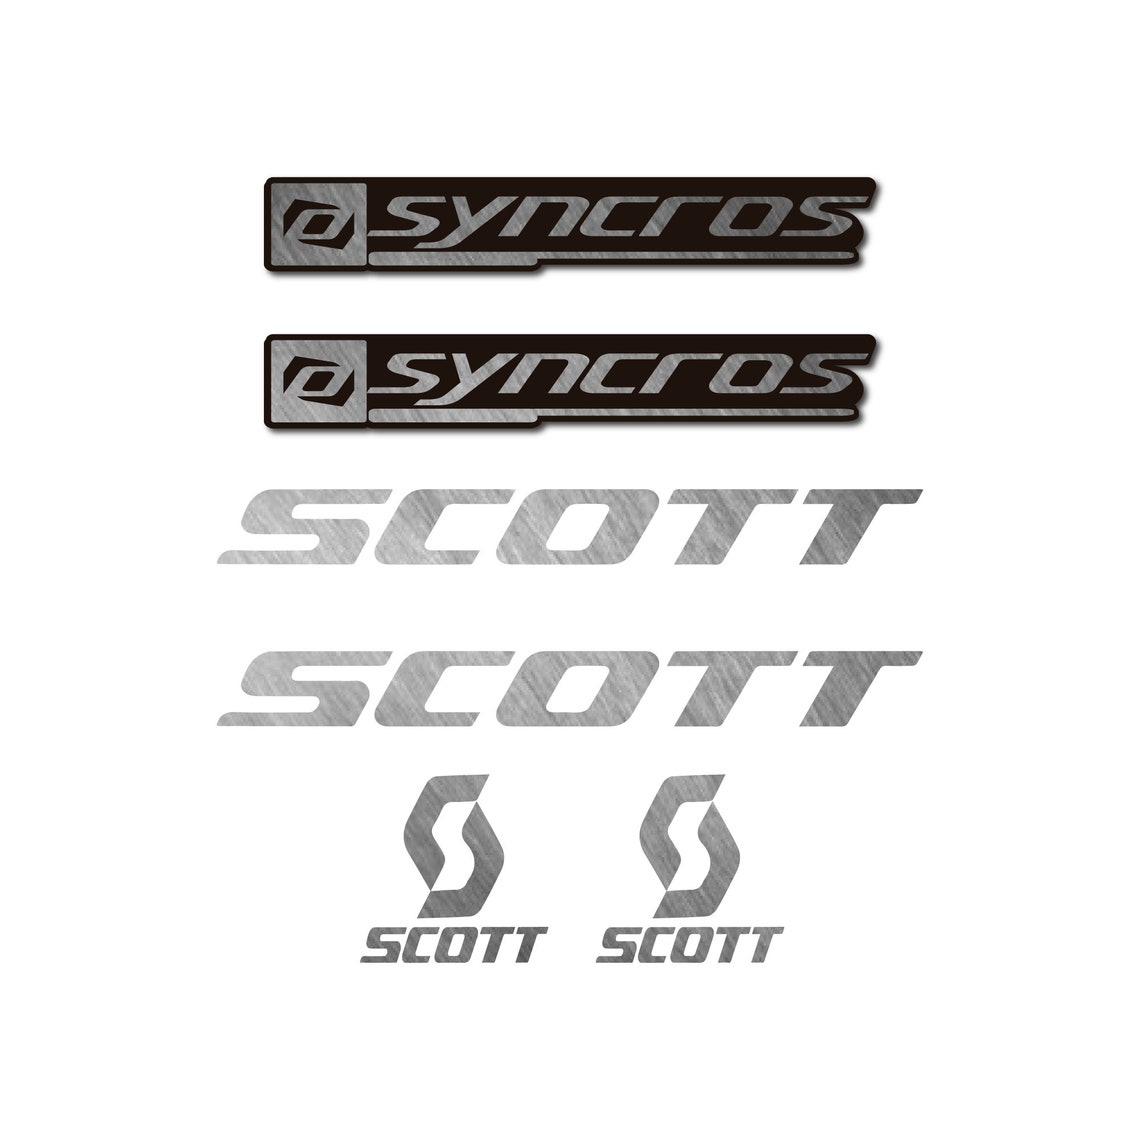 Rahmen Fahrrad Aufkleber Syncros Scott Bike Aufkleber